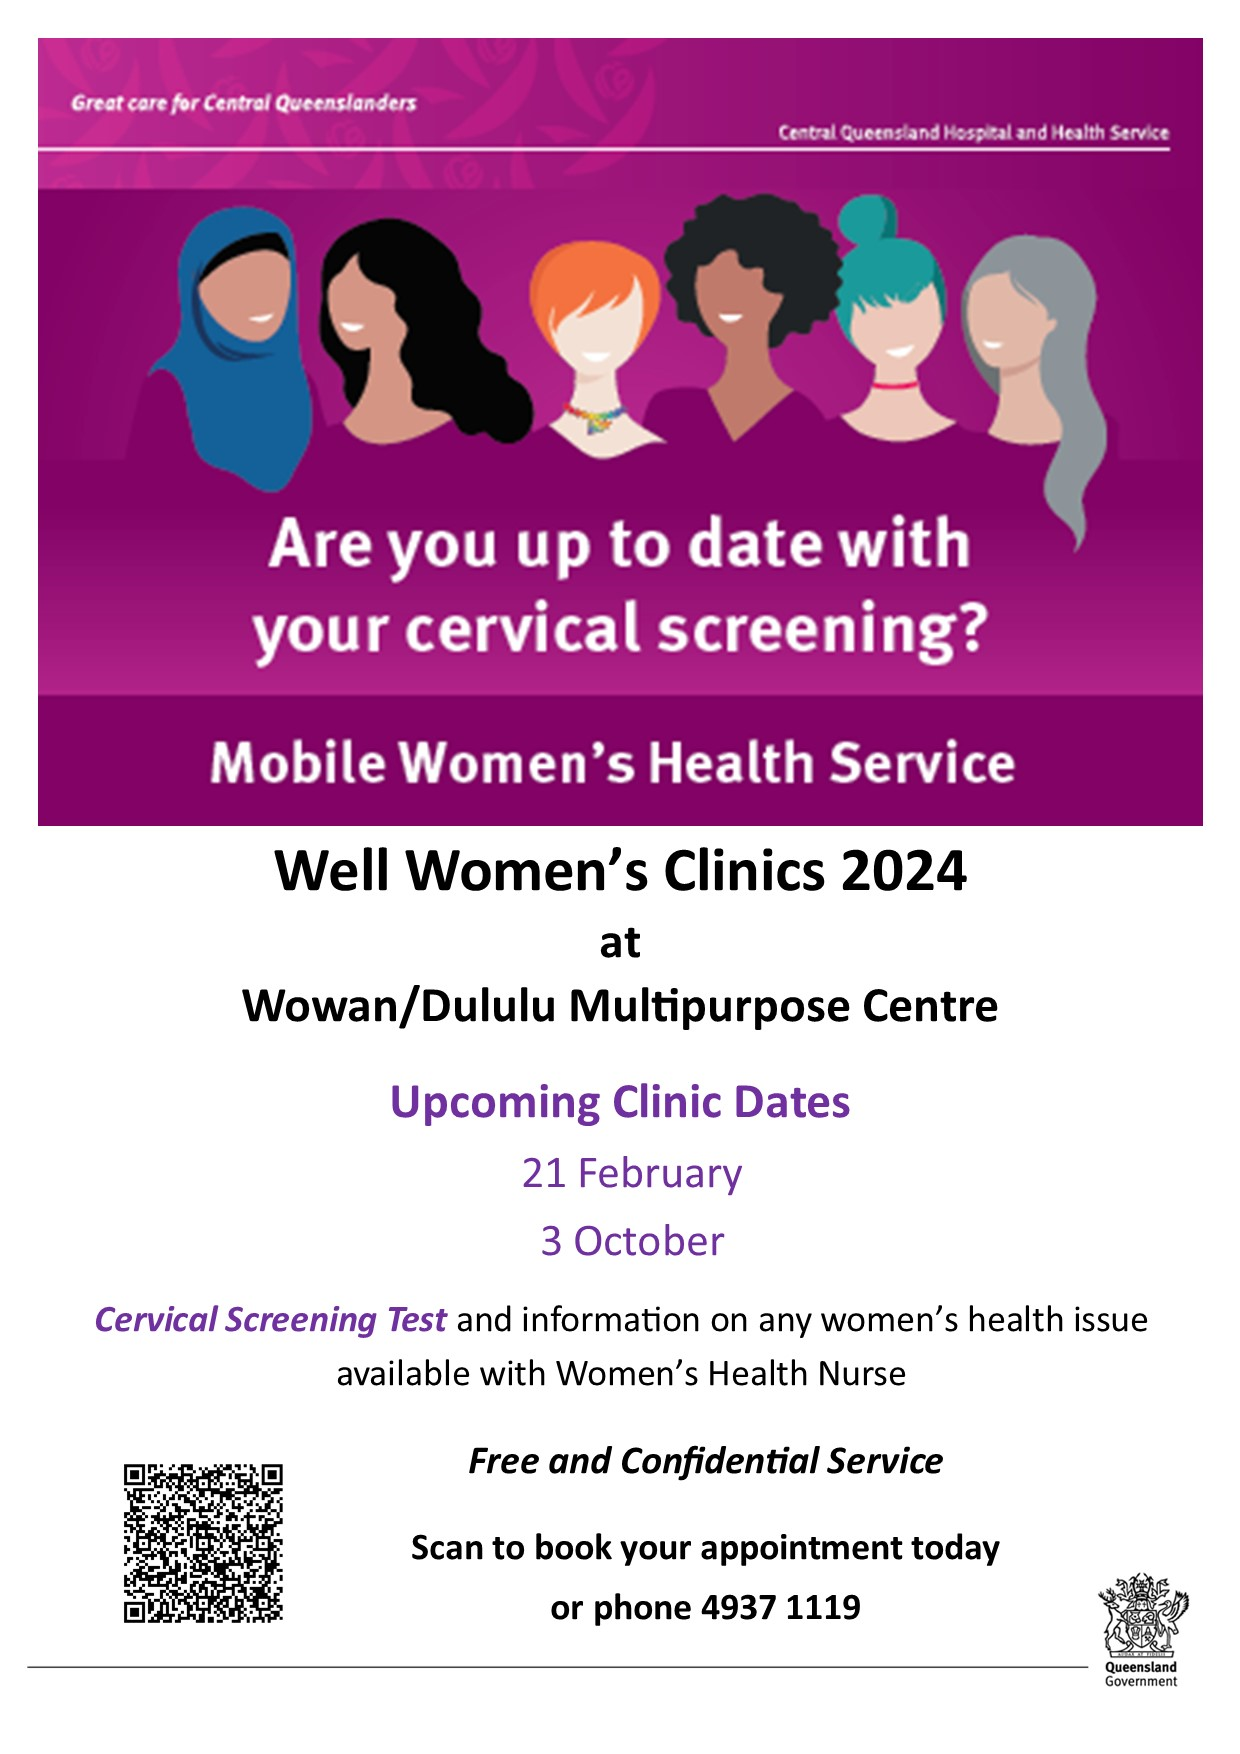 Mobile Women's Health Service - Well Women's Clinics 2024 - Wowan/Dululu Multipurpose Centre